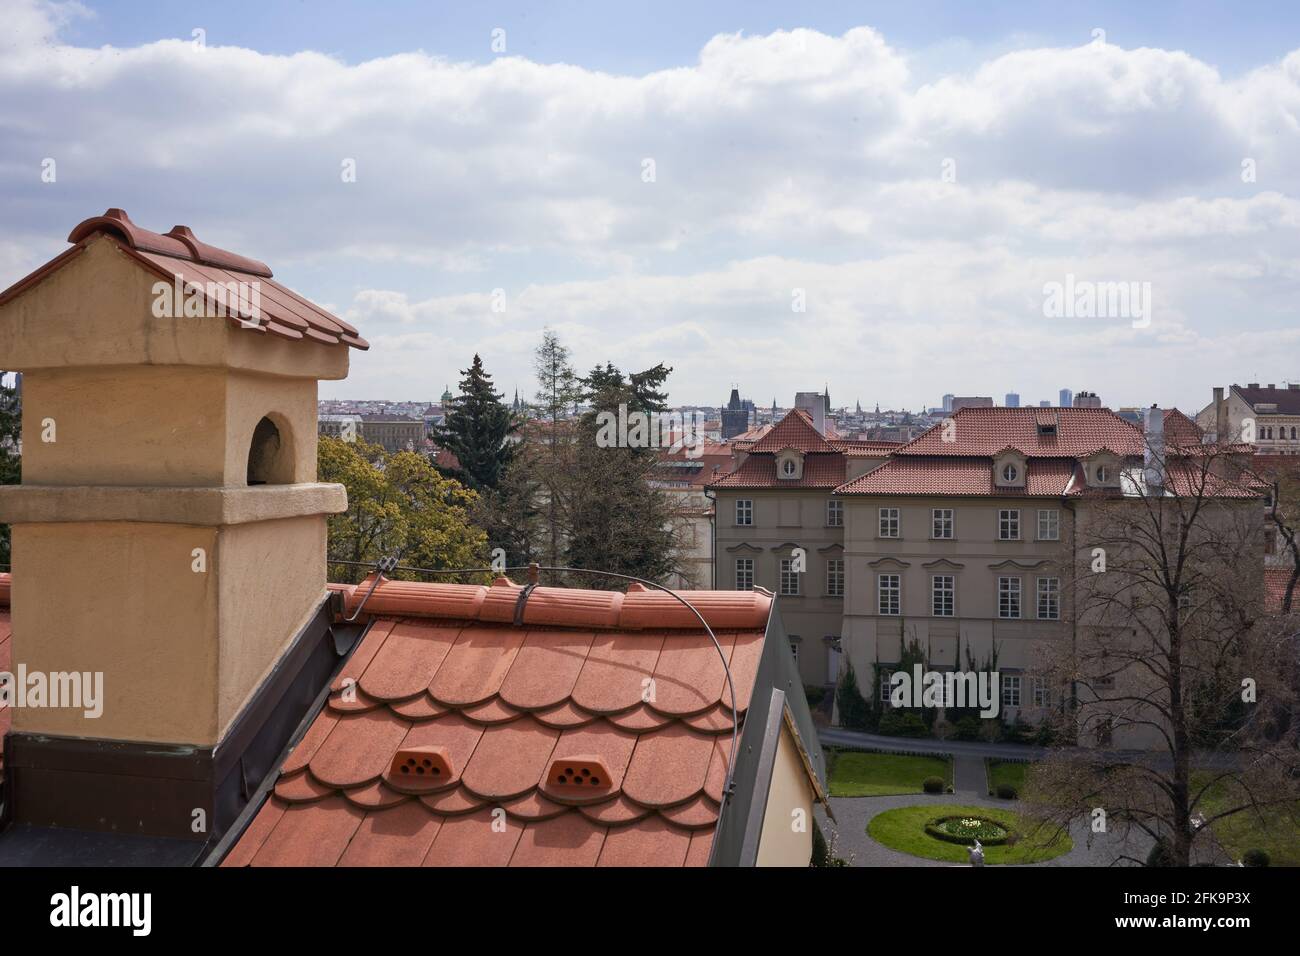 Praga, Repubblica Ceca - 23 aprile 2021 - Vista di Praga dal Giardino di Fürstenberg Foto Stock